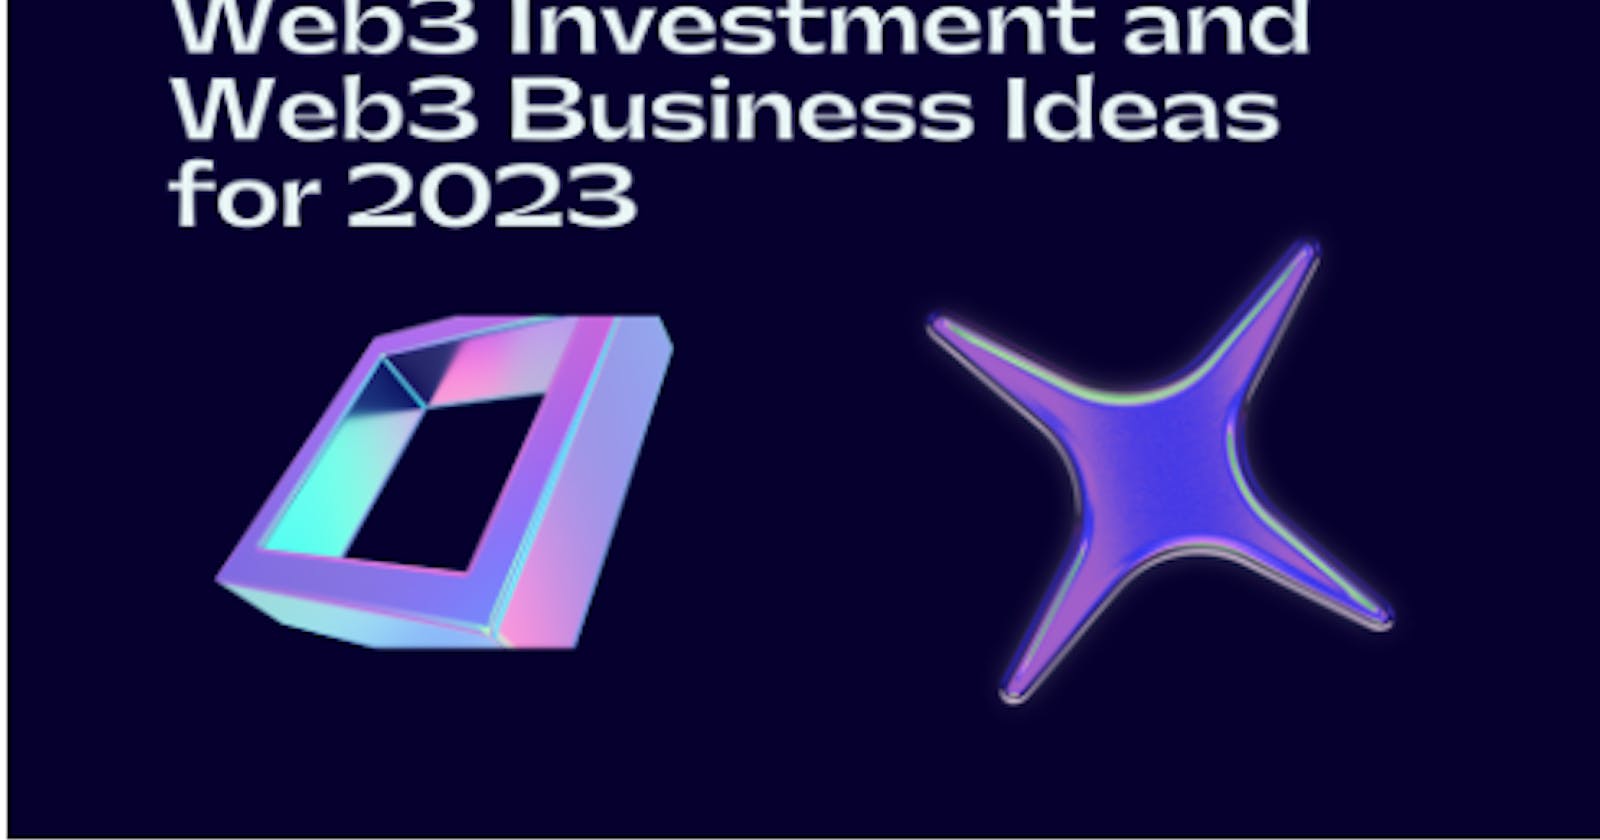 Innovative Web3 Business Ideas For 2023